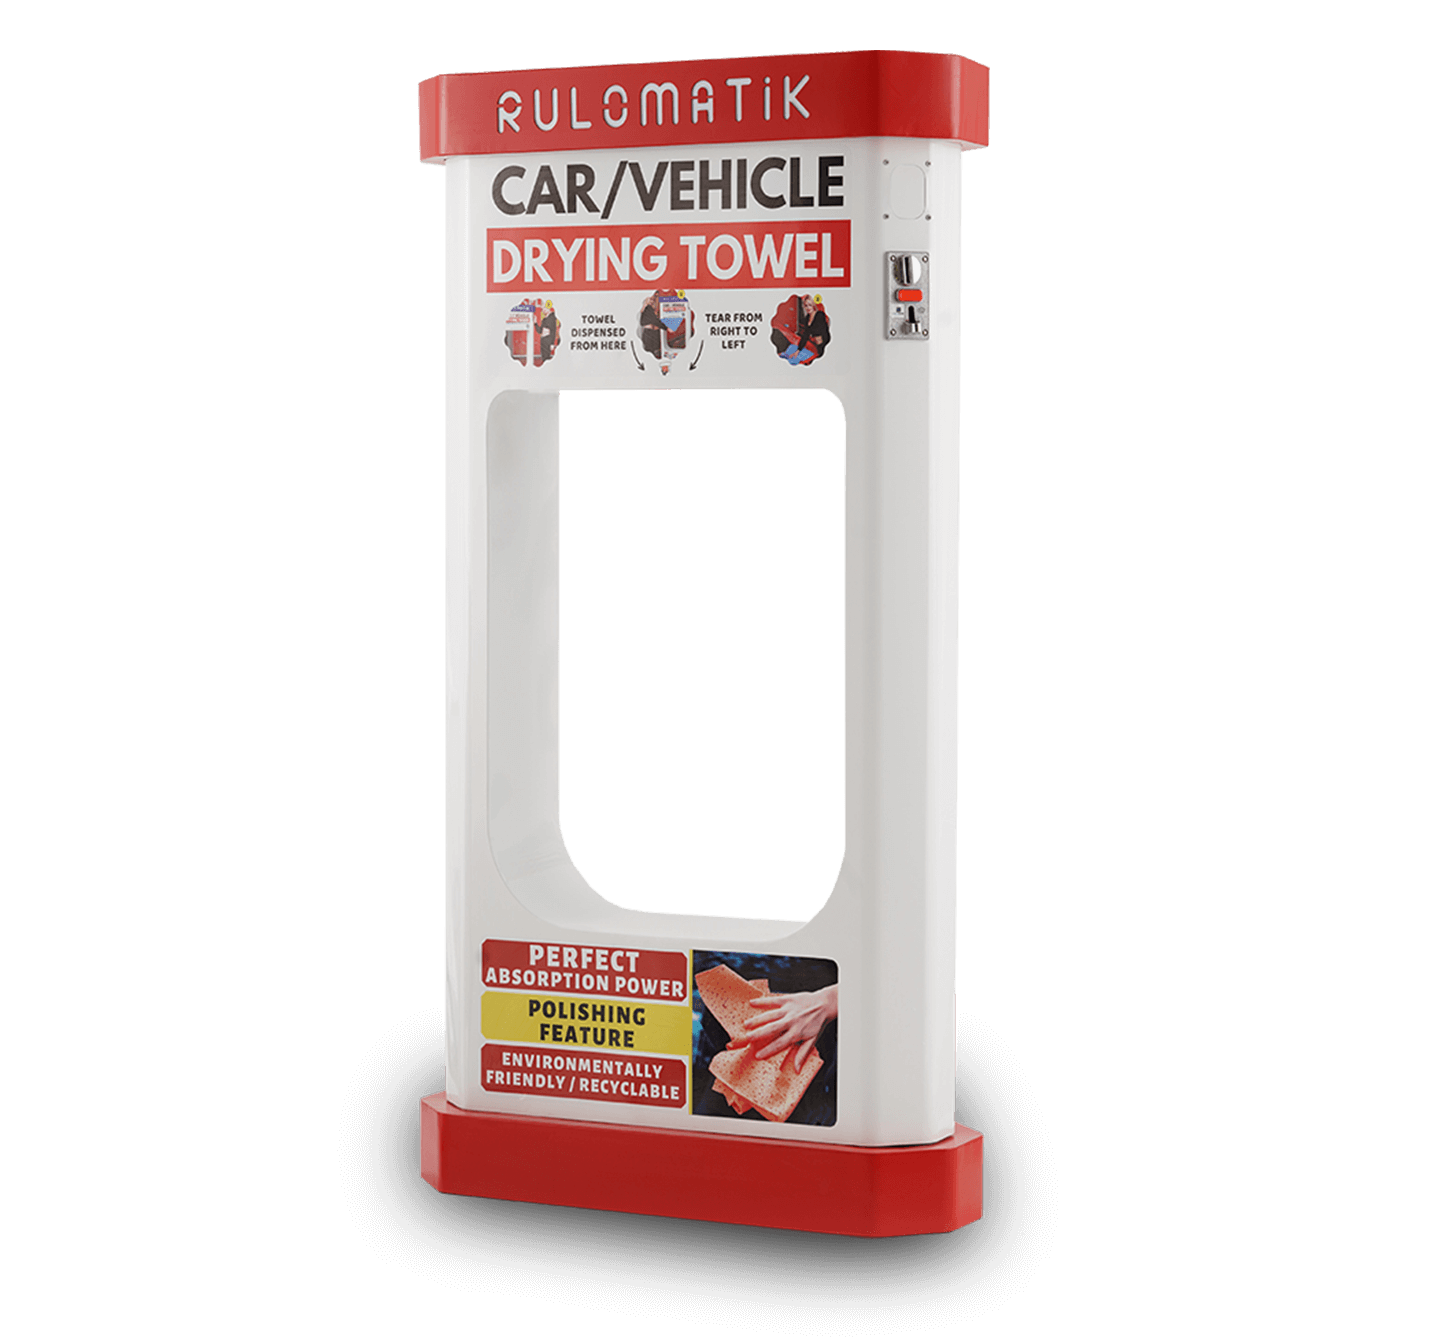 Rulomatik™ Car Drying Towel Vending Machine